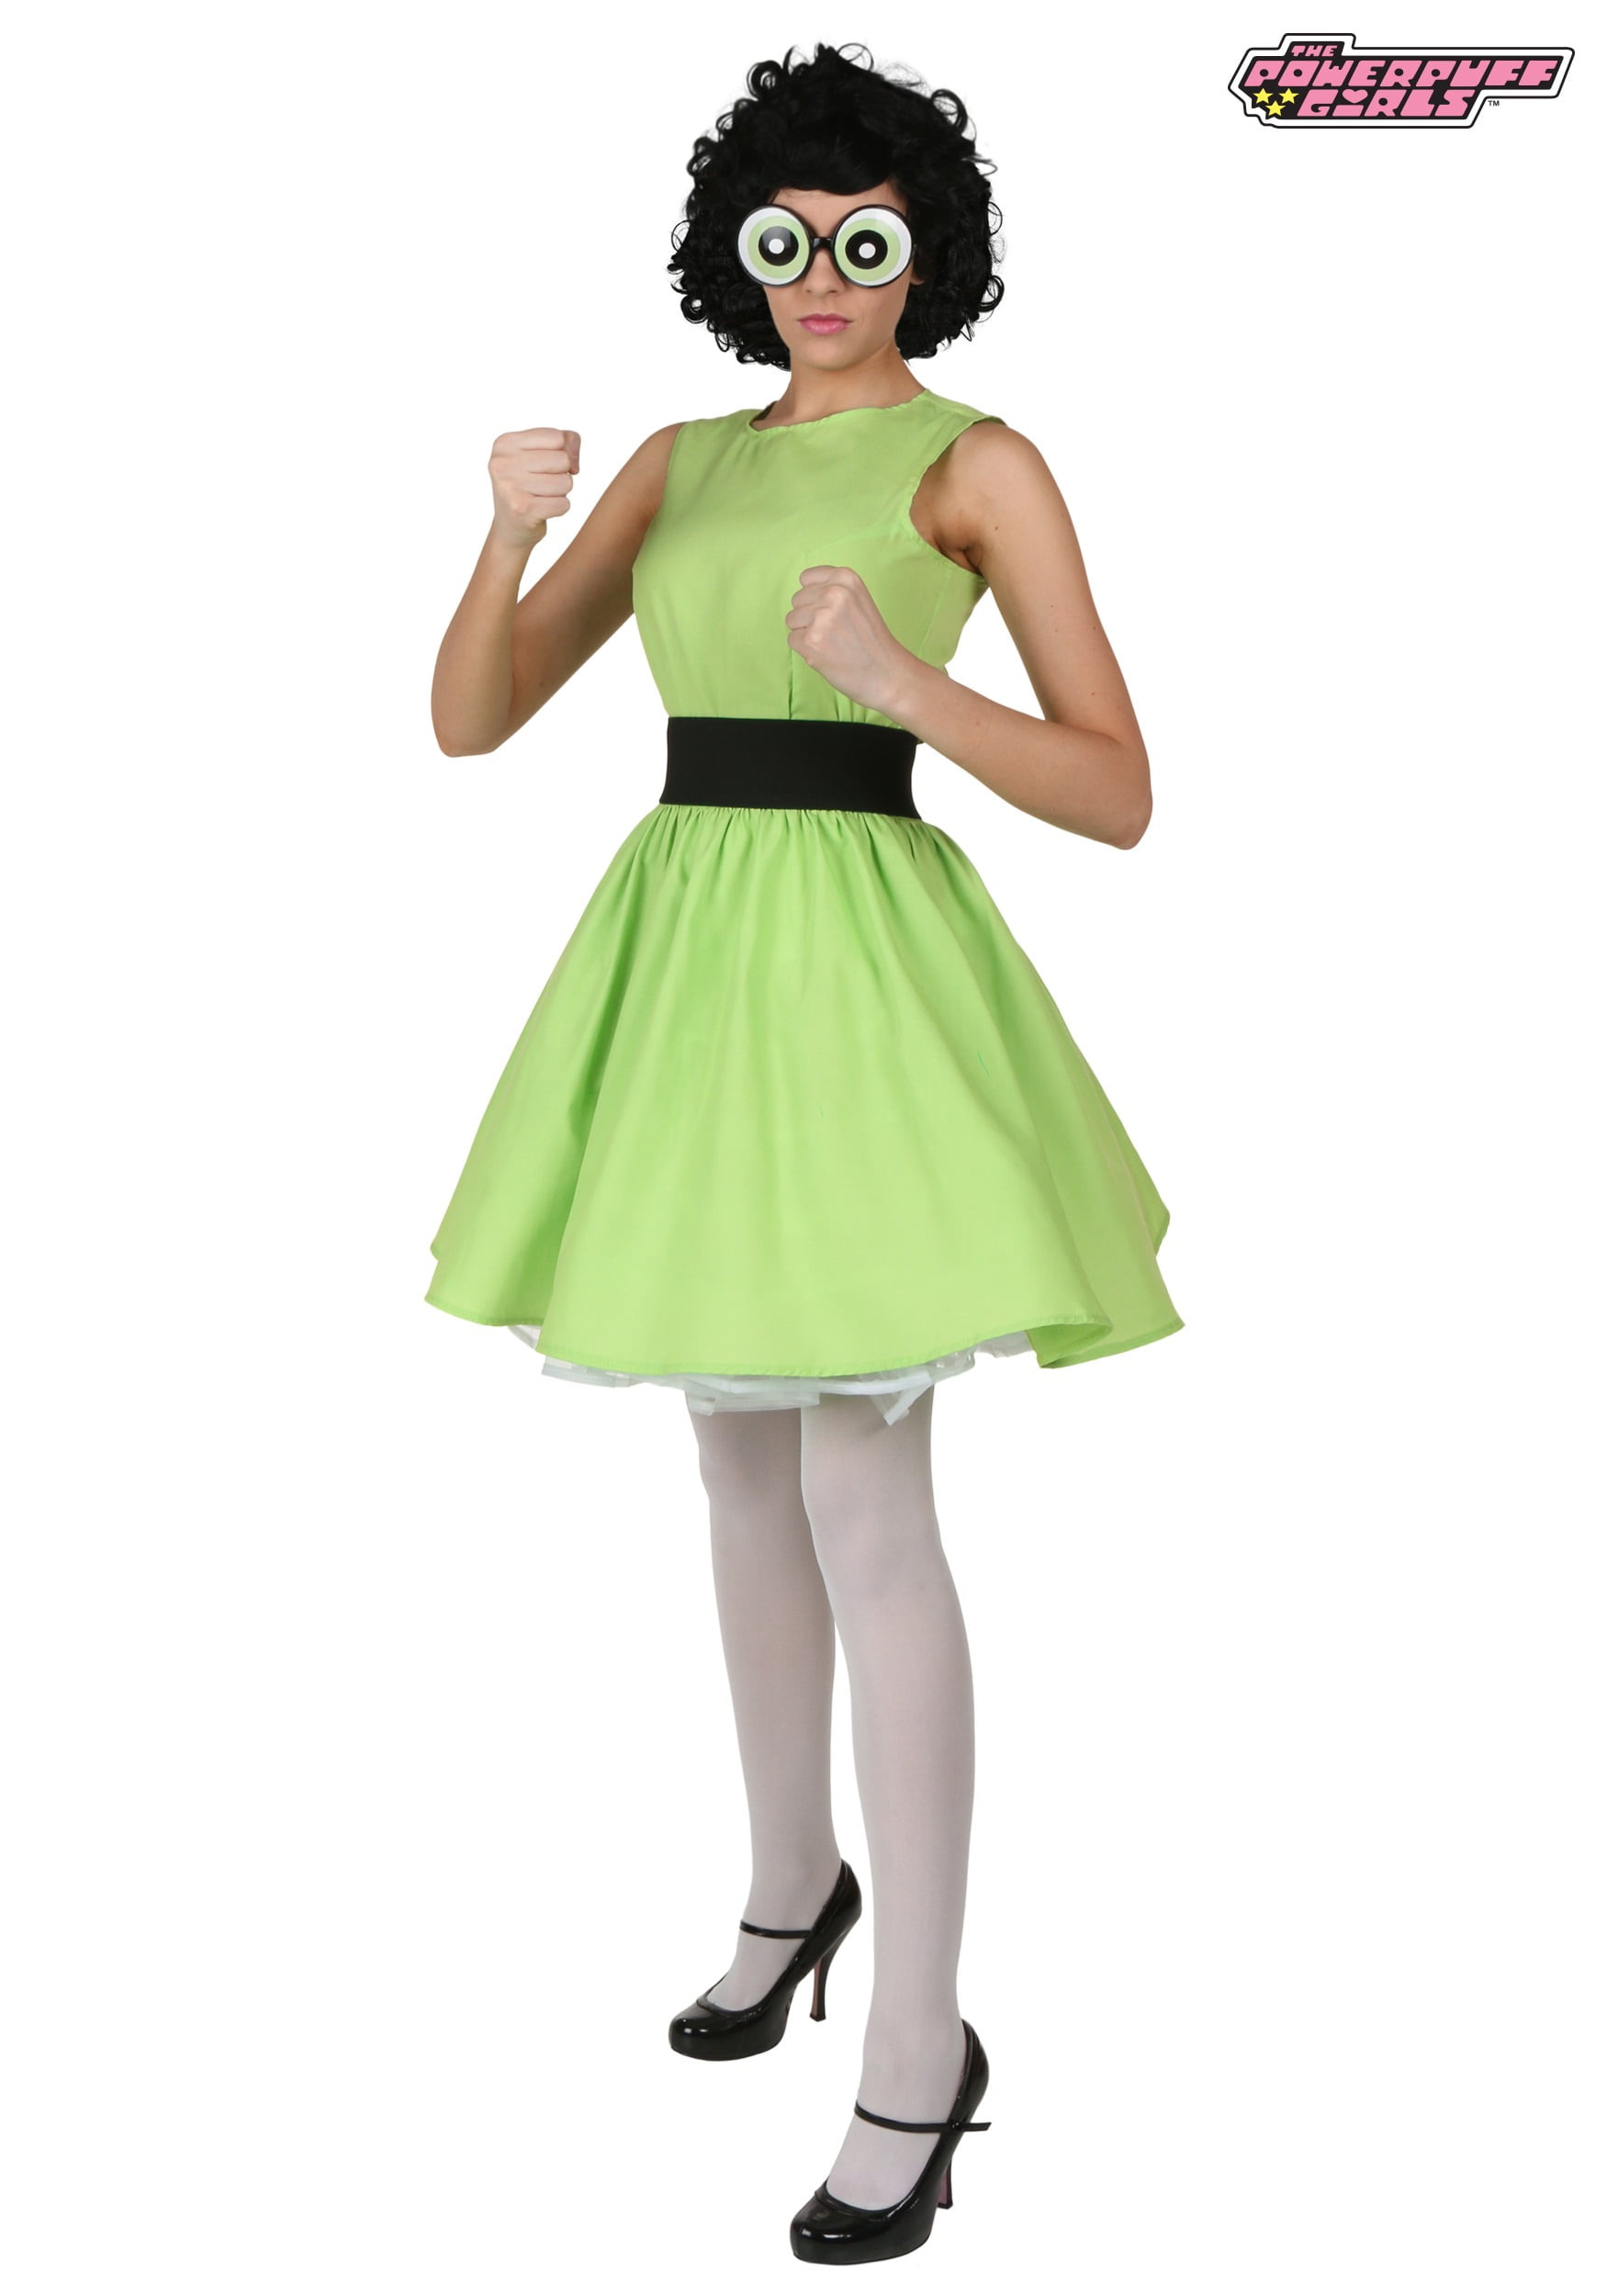 Buy Plus Size Buttercup Powerpuff Girl Costume at Walmart.com.